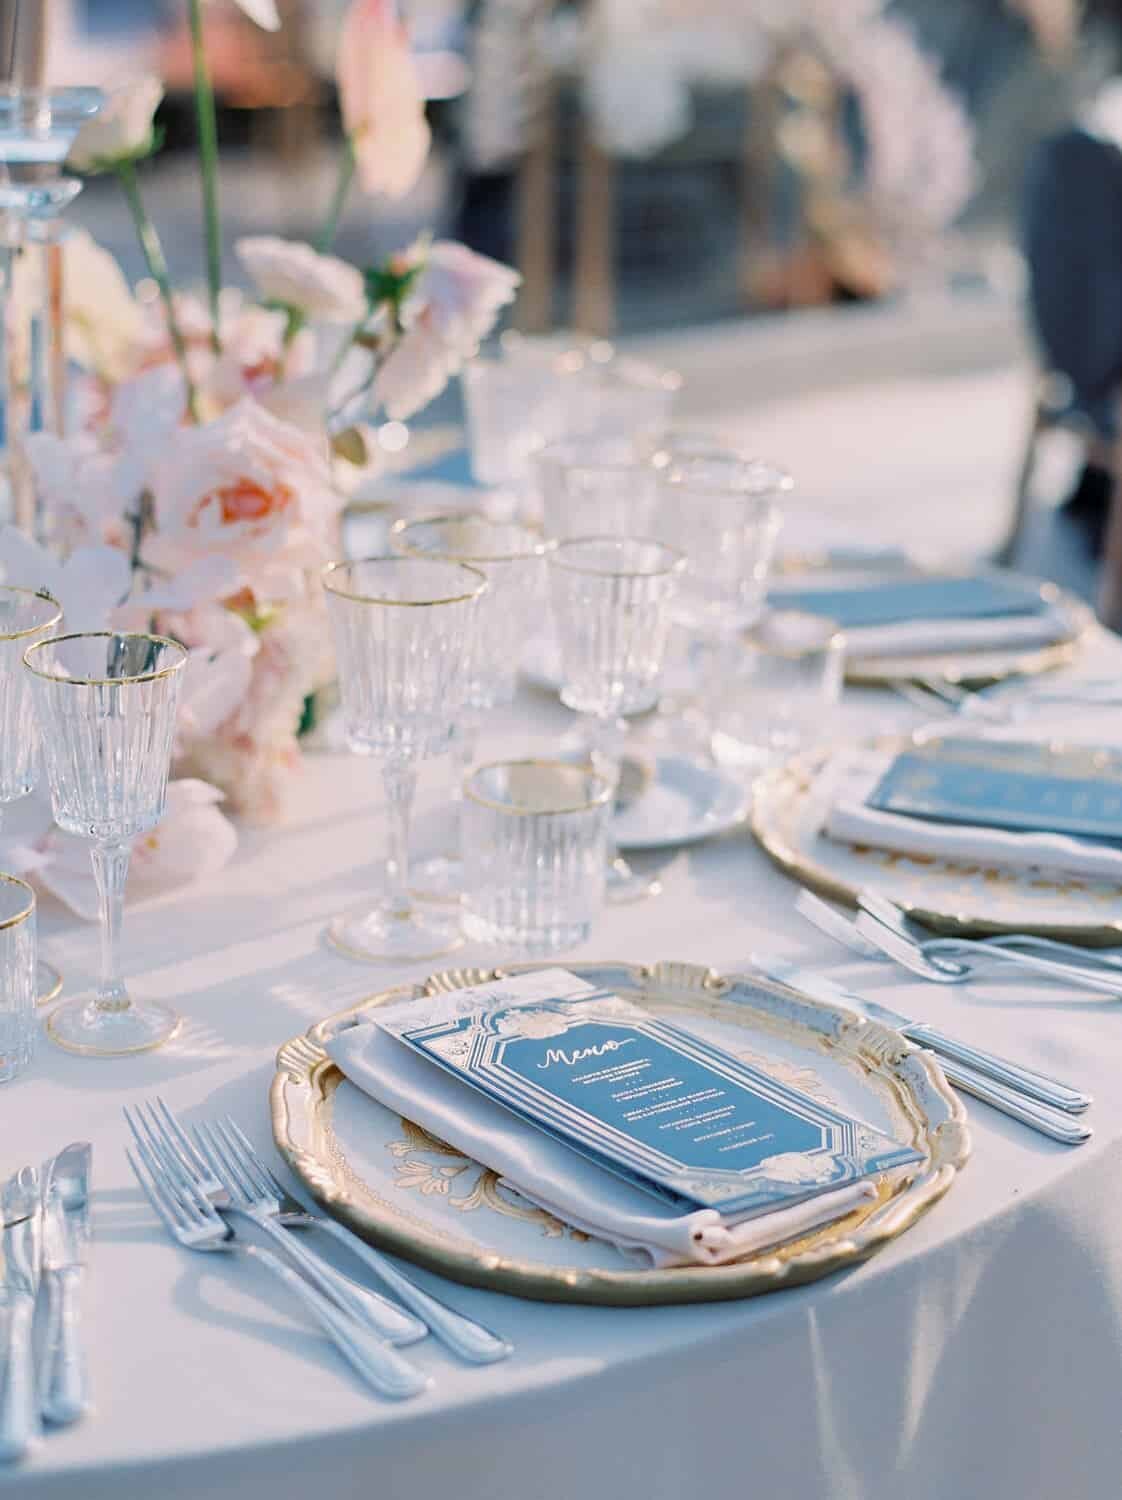 Lake-Como-Villa-Balbiano-wedding-Italy-decoration-table-setting-blue-by-Julia-Kaptelova-Phototgraphy-236